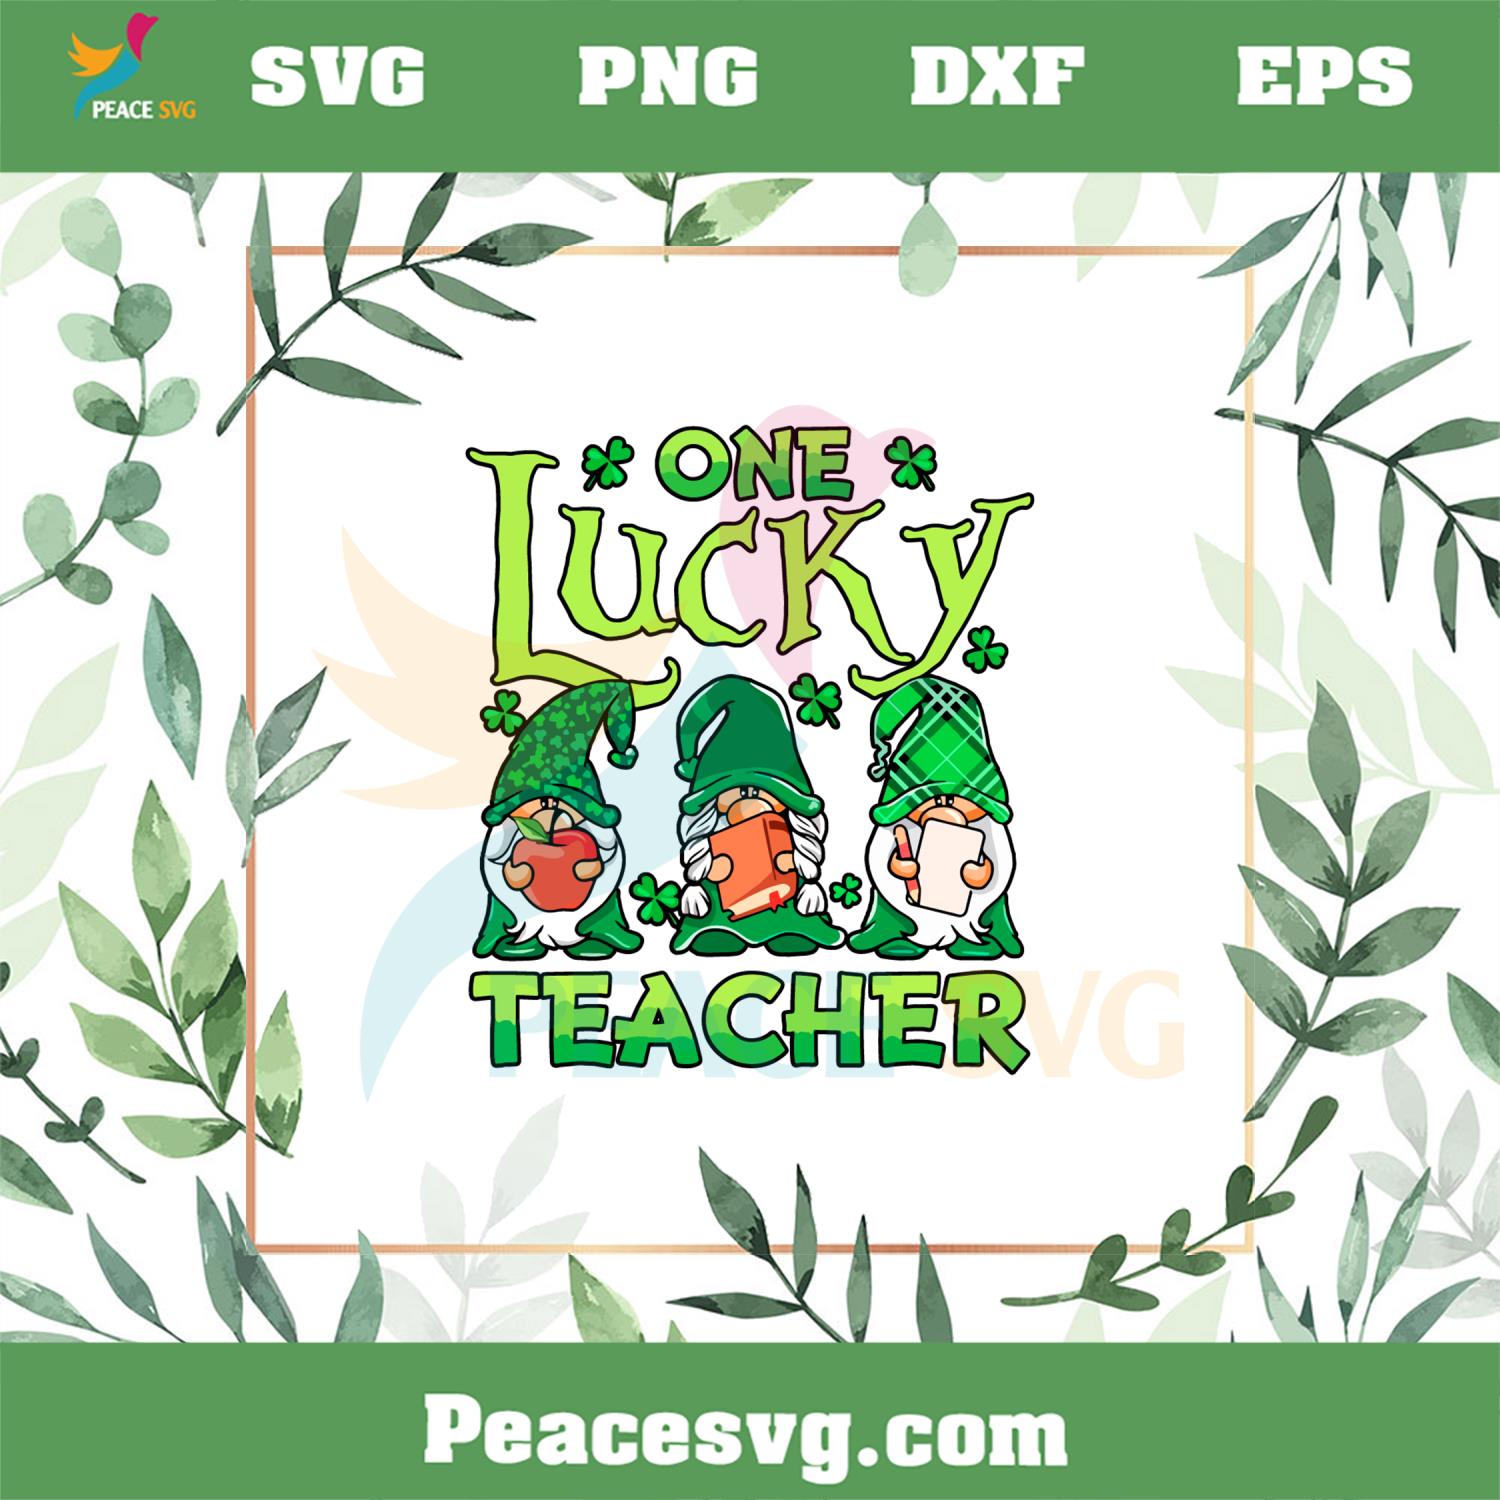 One Lucky Teacher Irish Gnomes St Patrick’s Day SVG Cutting Files